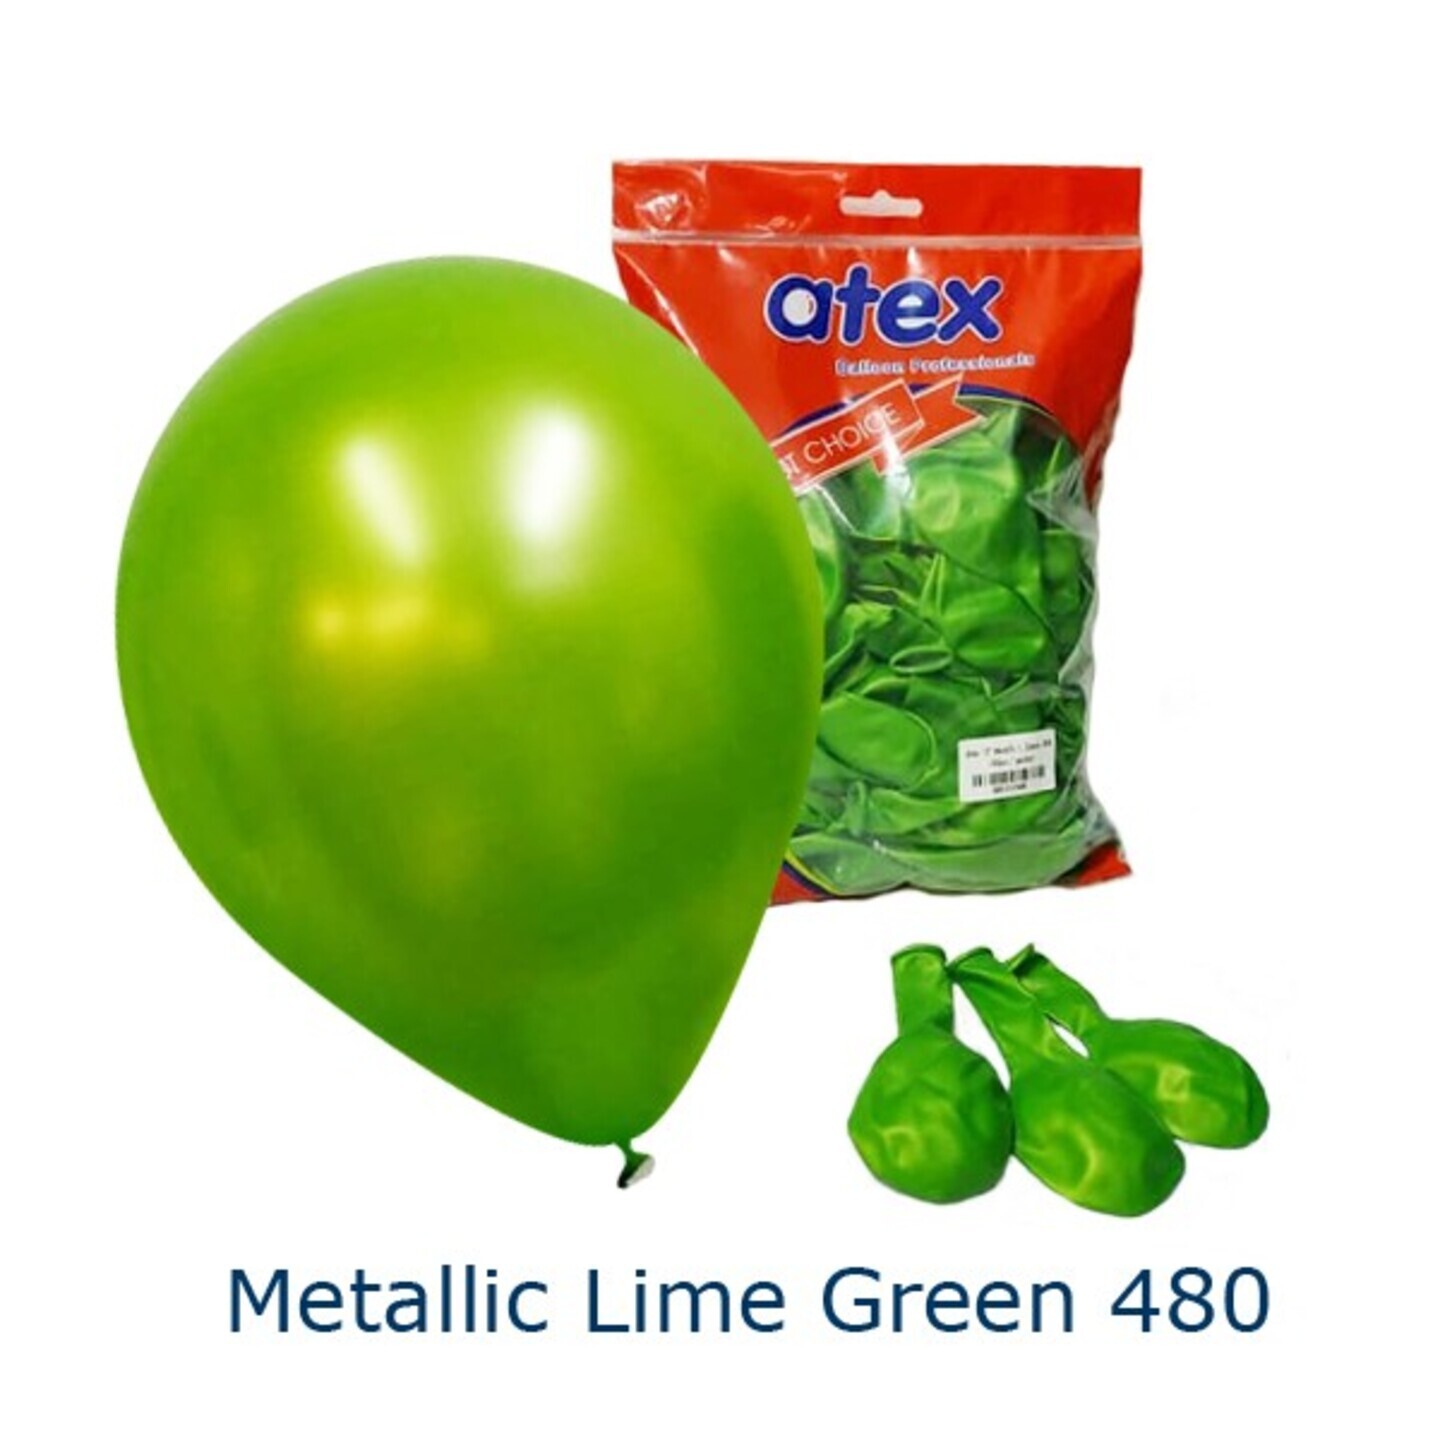 Metallic Lime Green 480